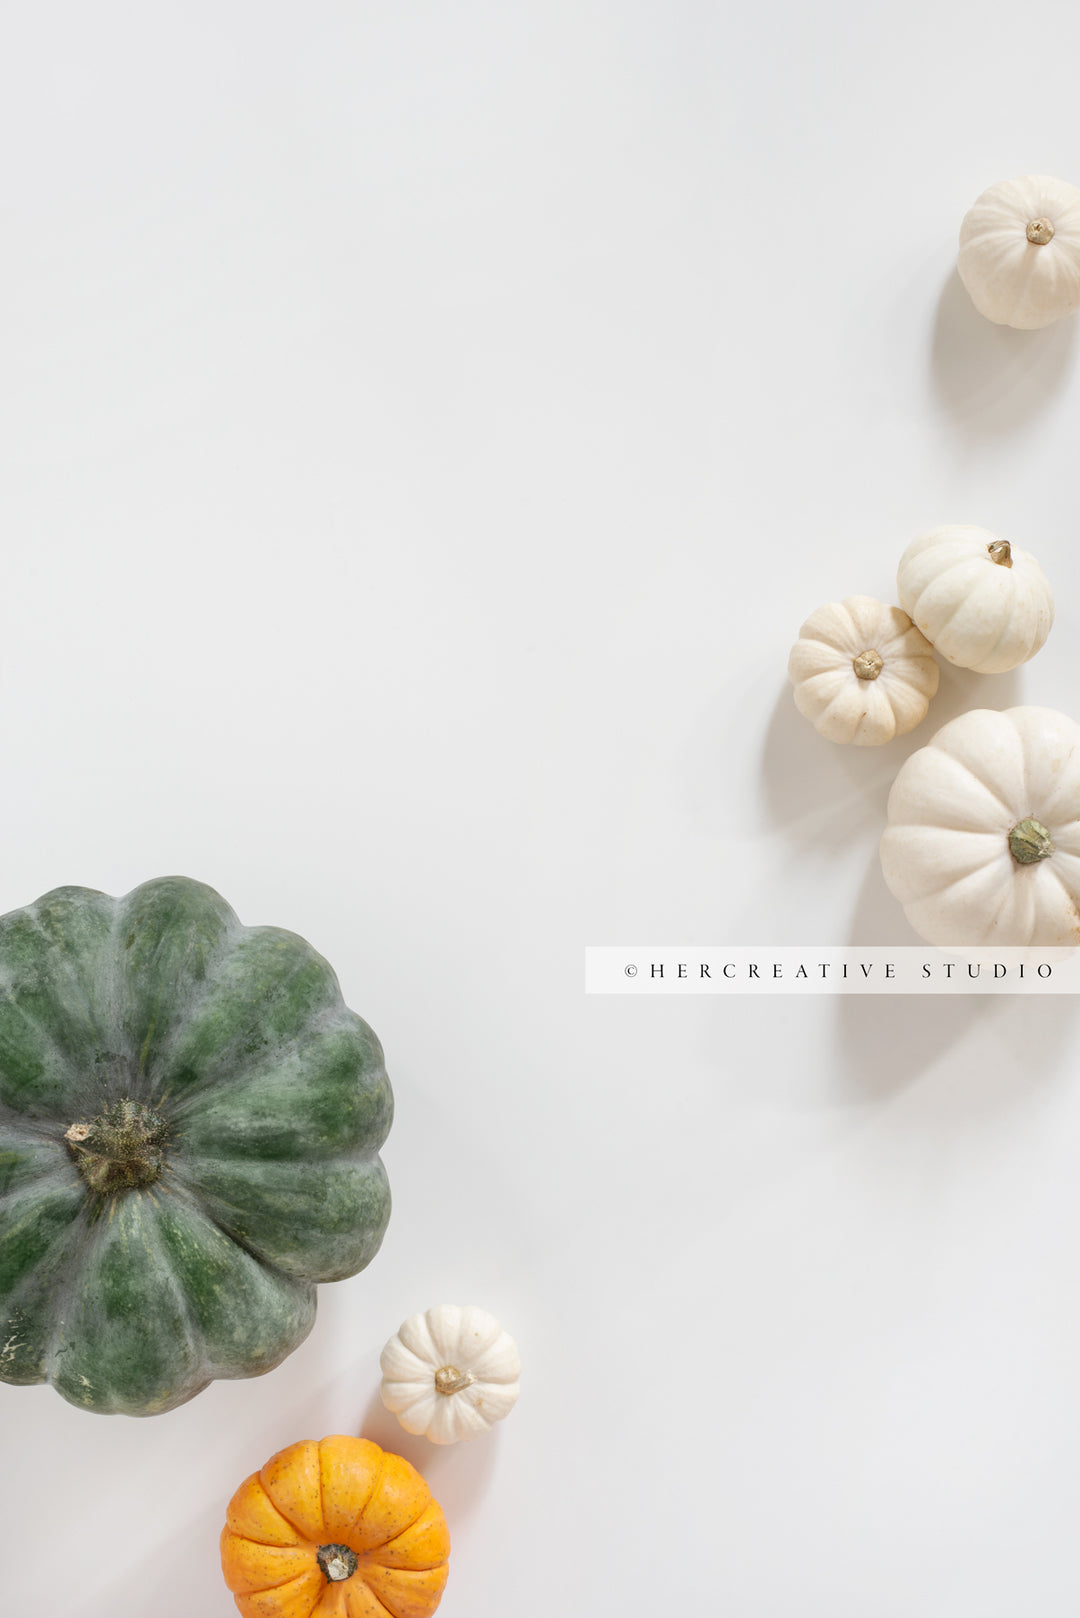 Pumpkins on White Background 8. Digital Stock Image.